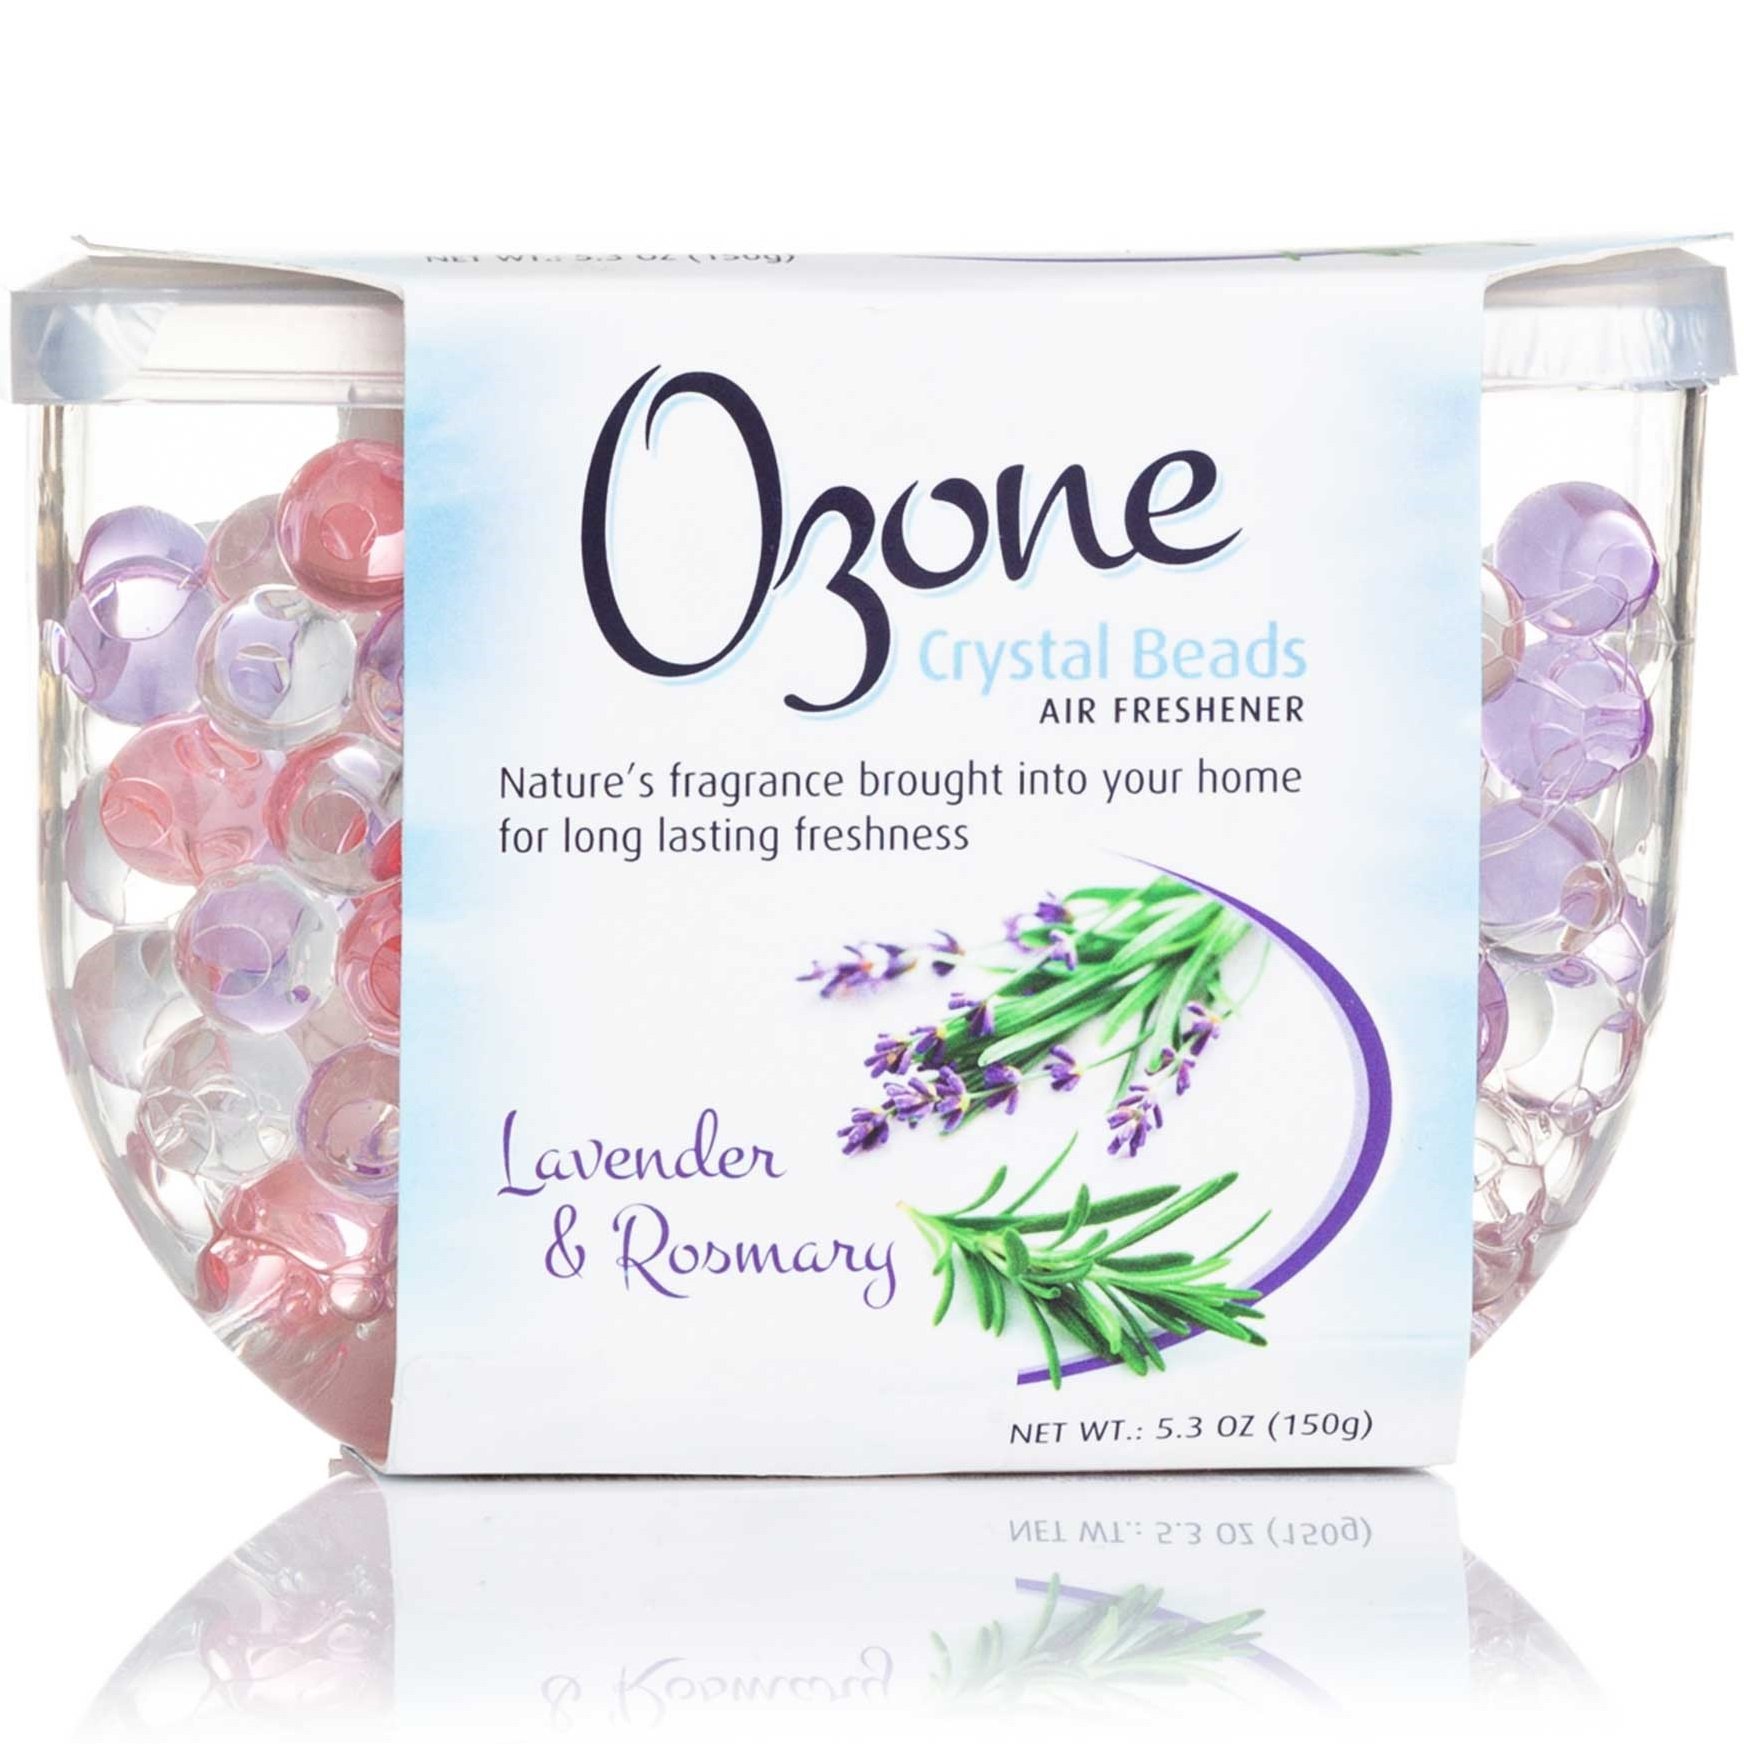 Освежитель воздуха Ozone кристаллический на гелевой основе Crystal Beads, Лаванда и Розмарин, 150 г - фото 1